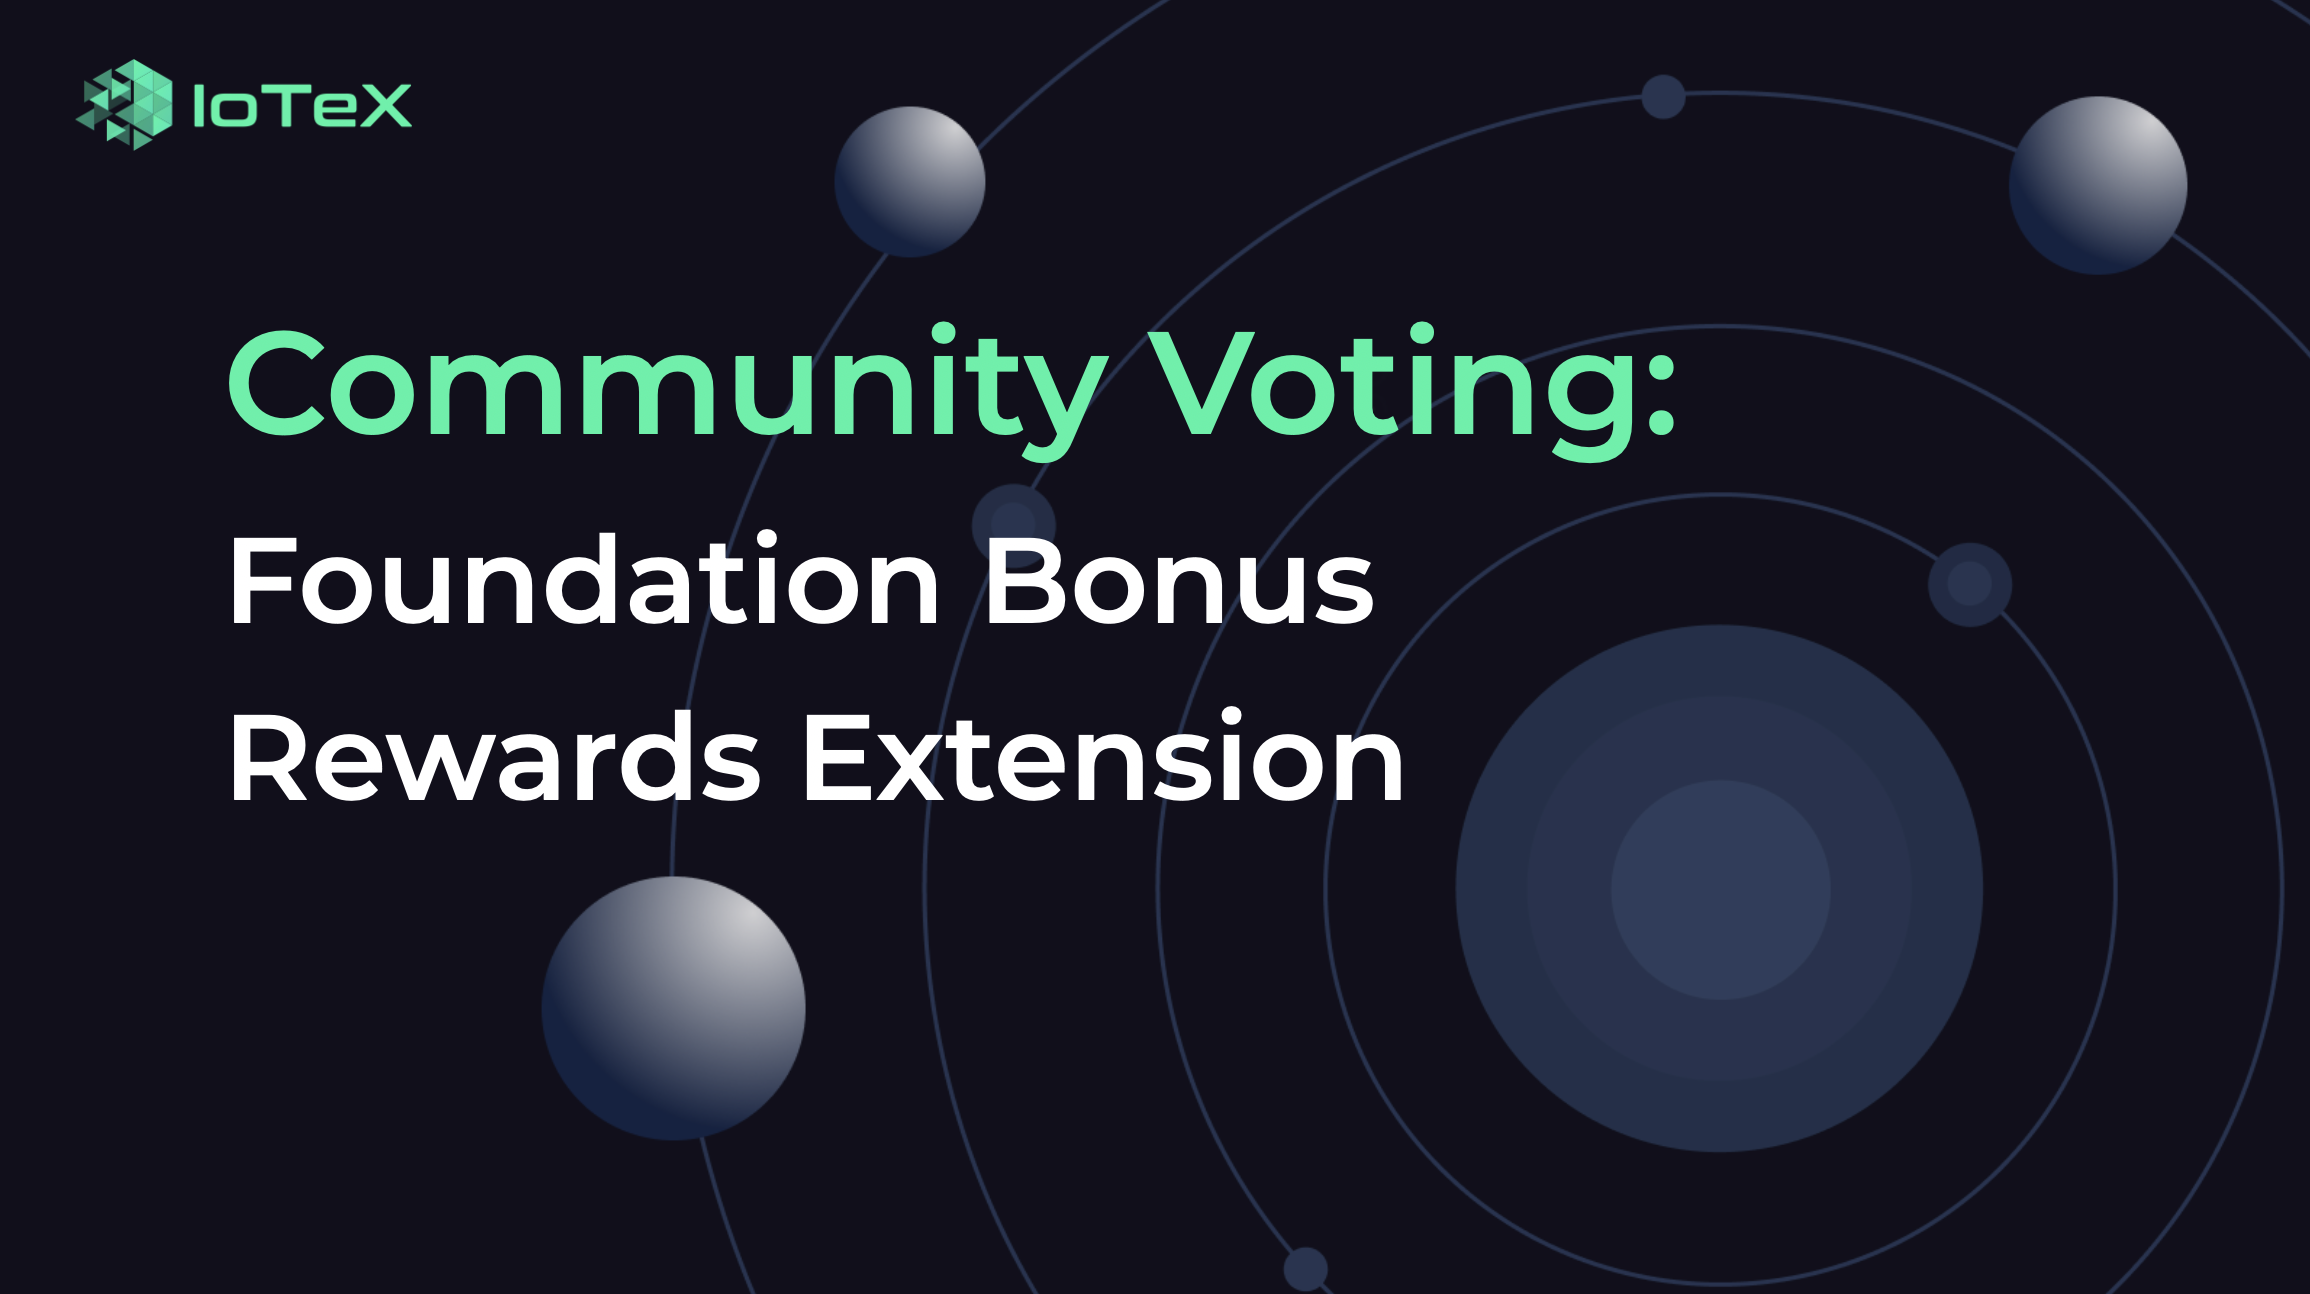 Community Voting Kickoff - Foundation Bonus Rewards Extension